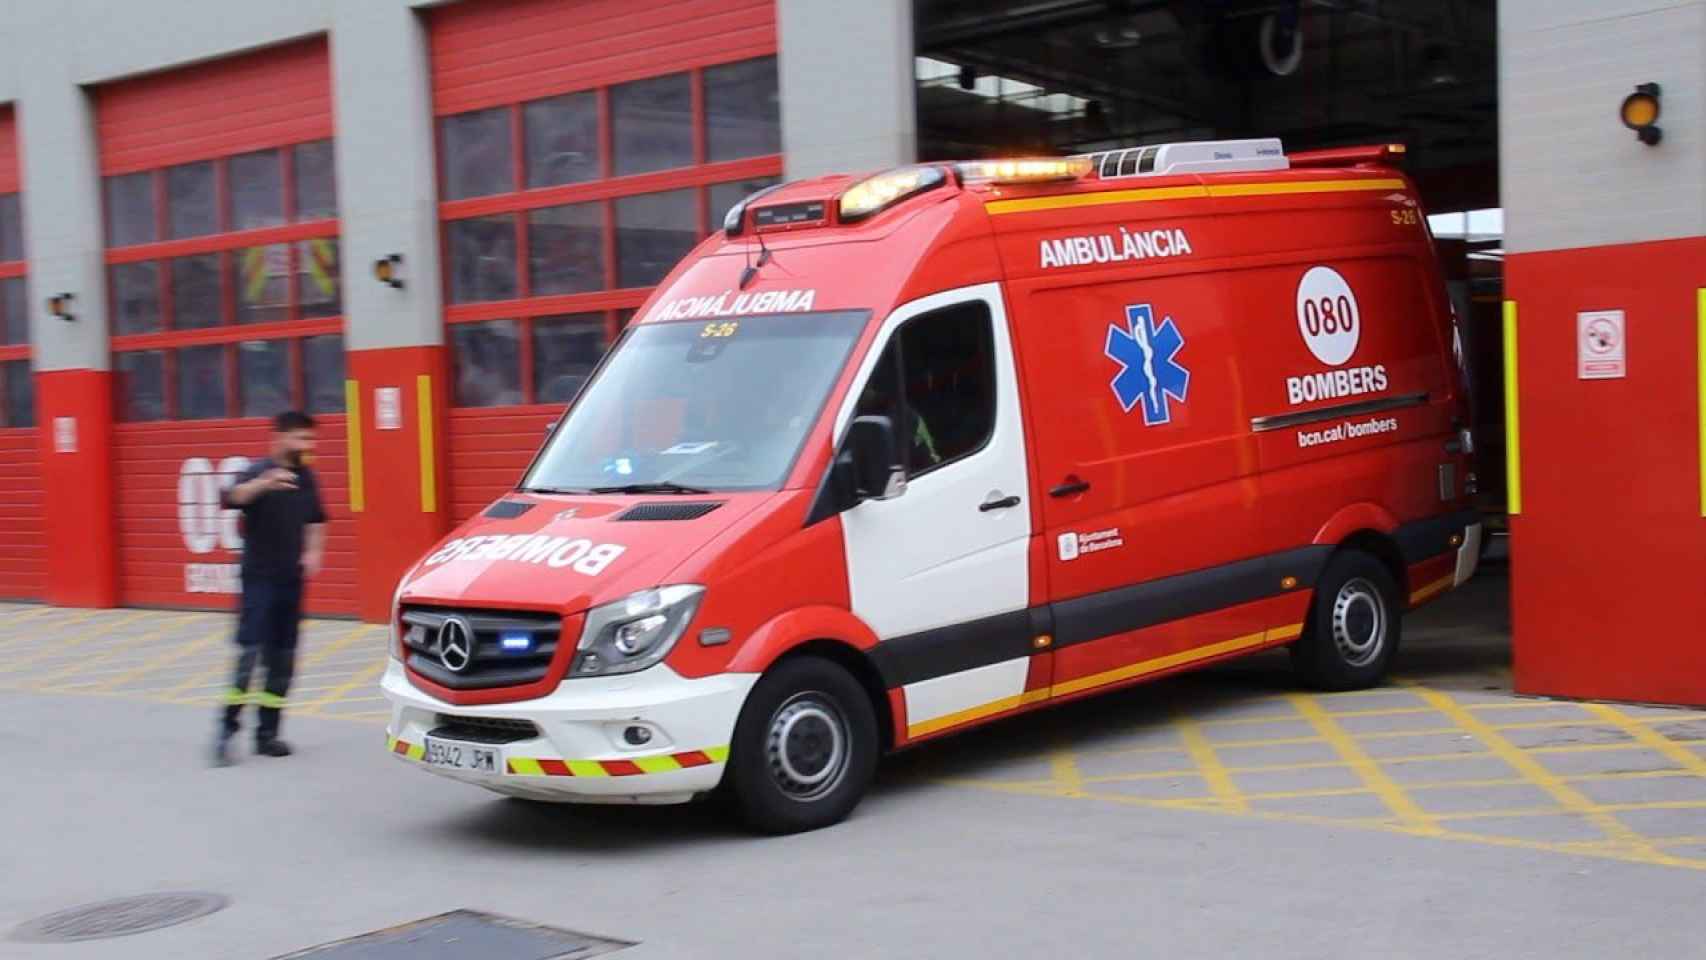 Una ambulancia de los Bombers de Barcelona / YOUTUBE